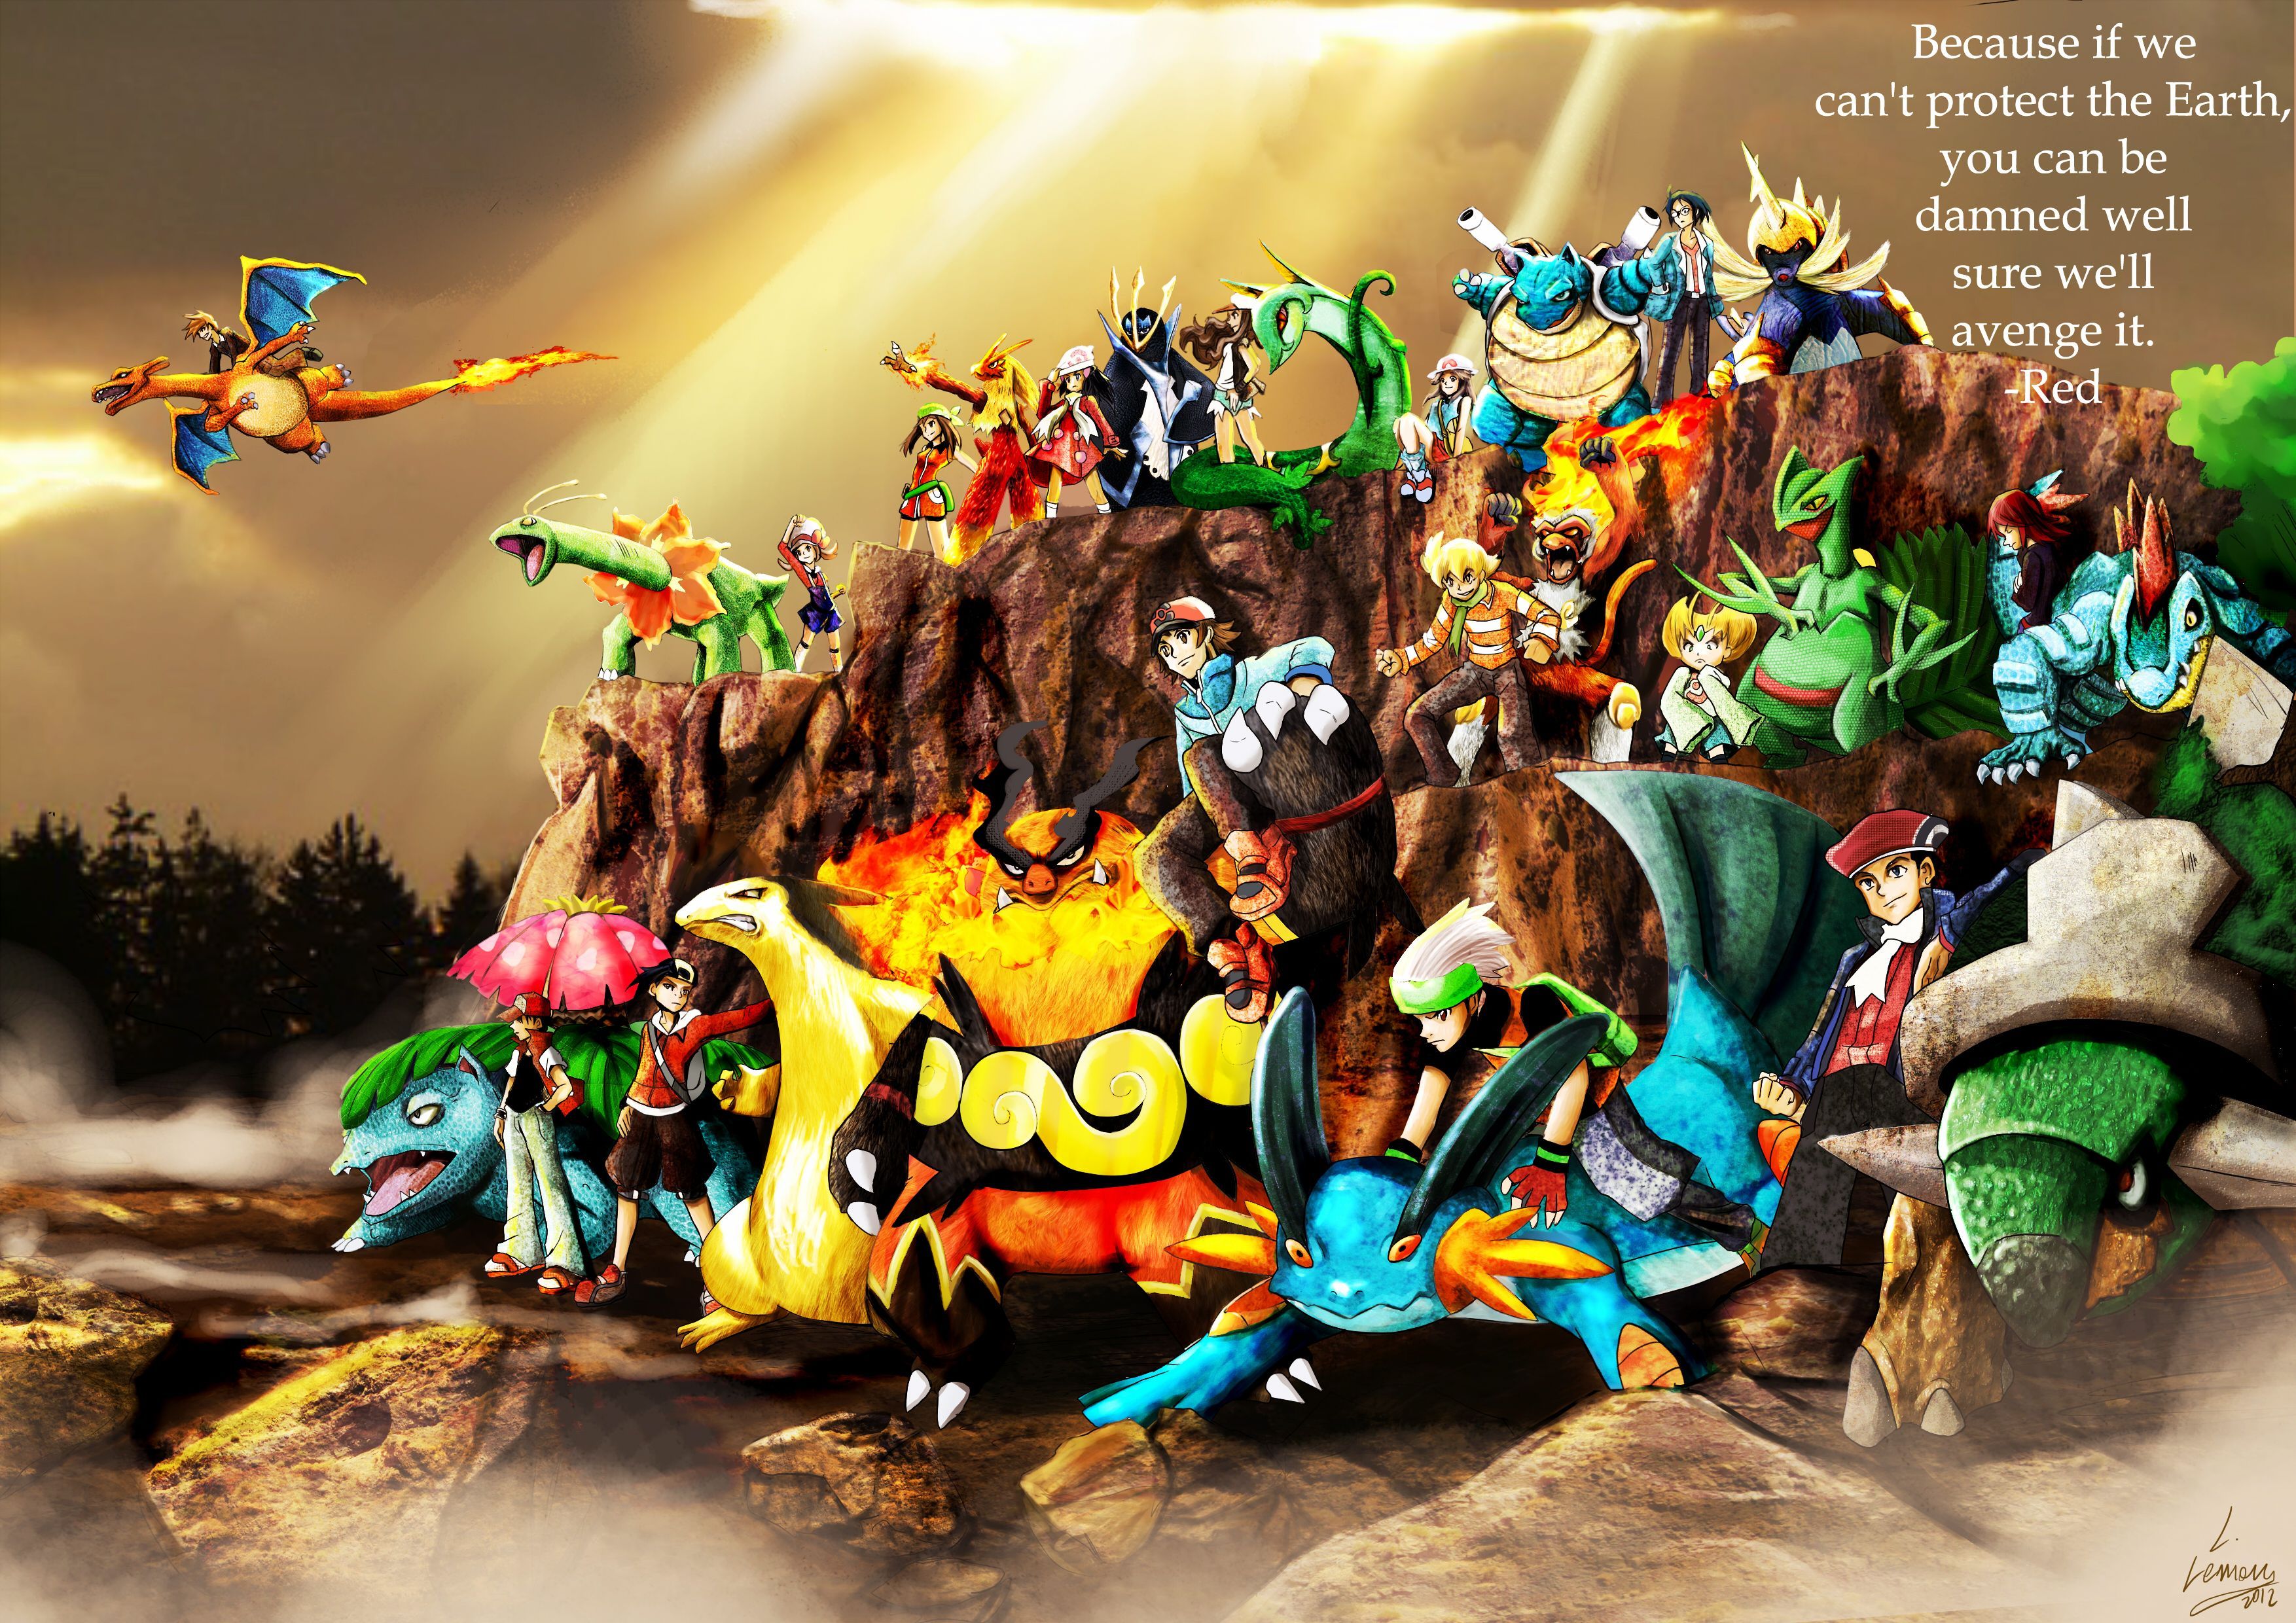 2042 Pokémon HD Wallpapers | Backgrounds - Wallpaper Abyss